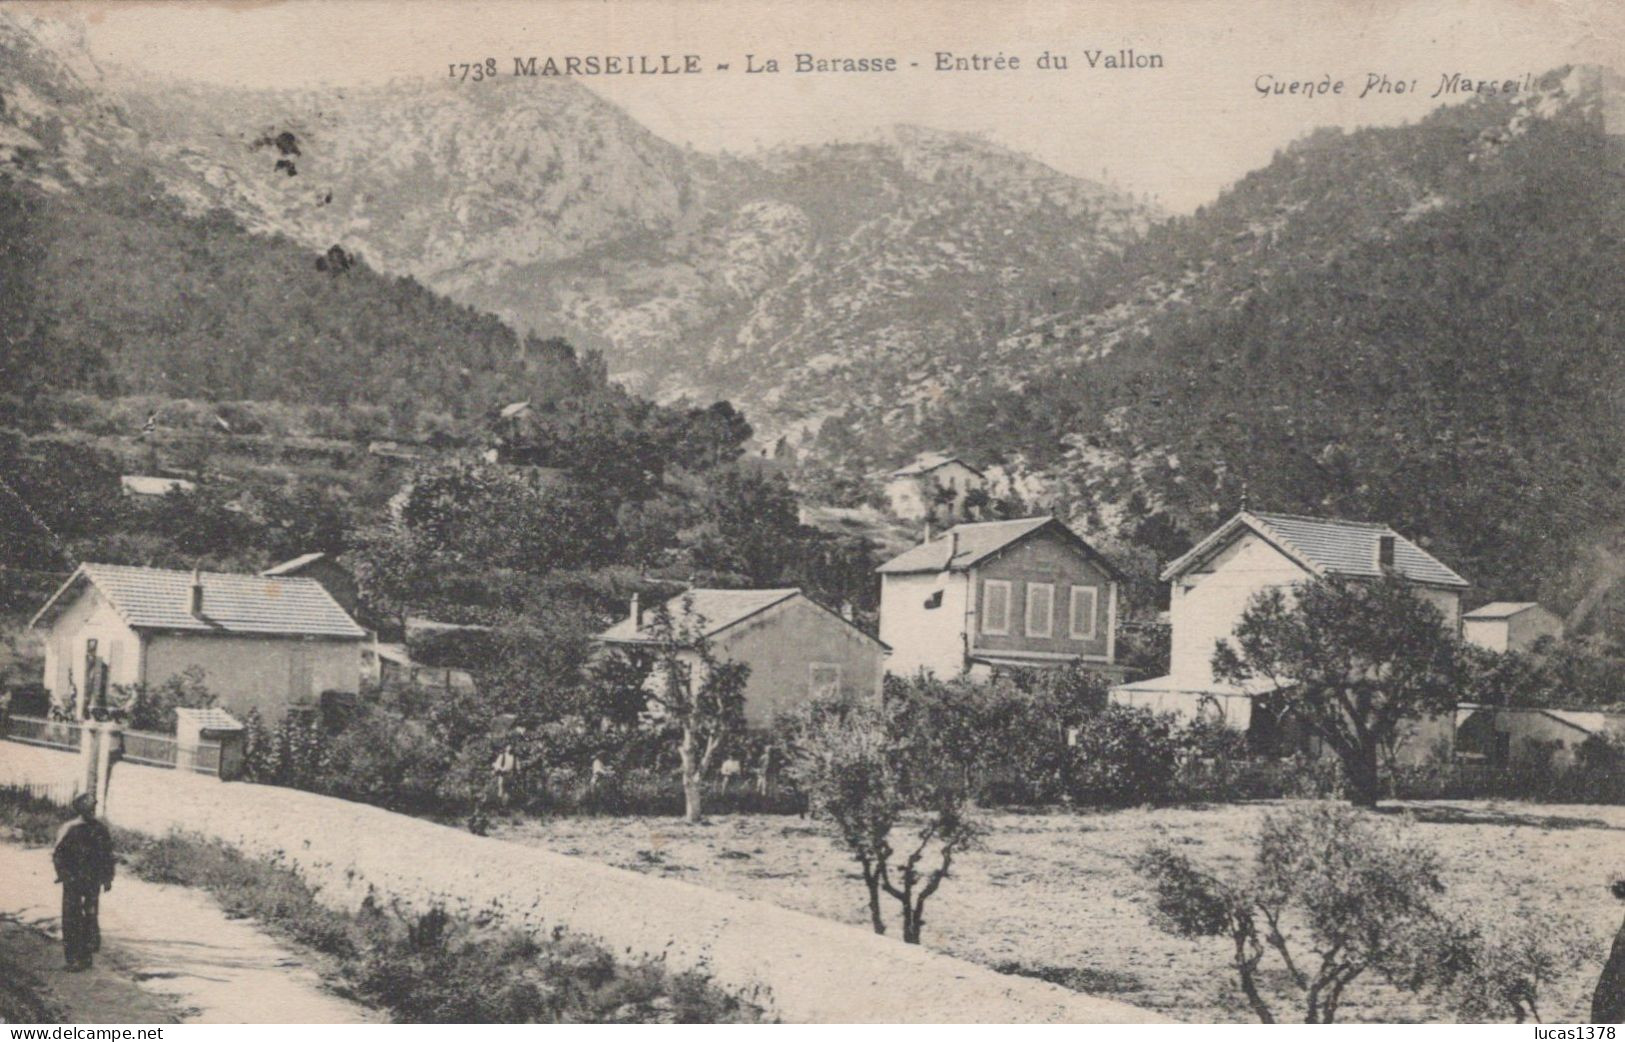 13 / MARSEILLE / LA BARASSE / LA BARASSE / ENTREE DU VALLON / GUENDE 1738 - Saint Marcel, La Barasse, Saint Menet